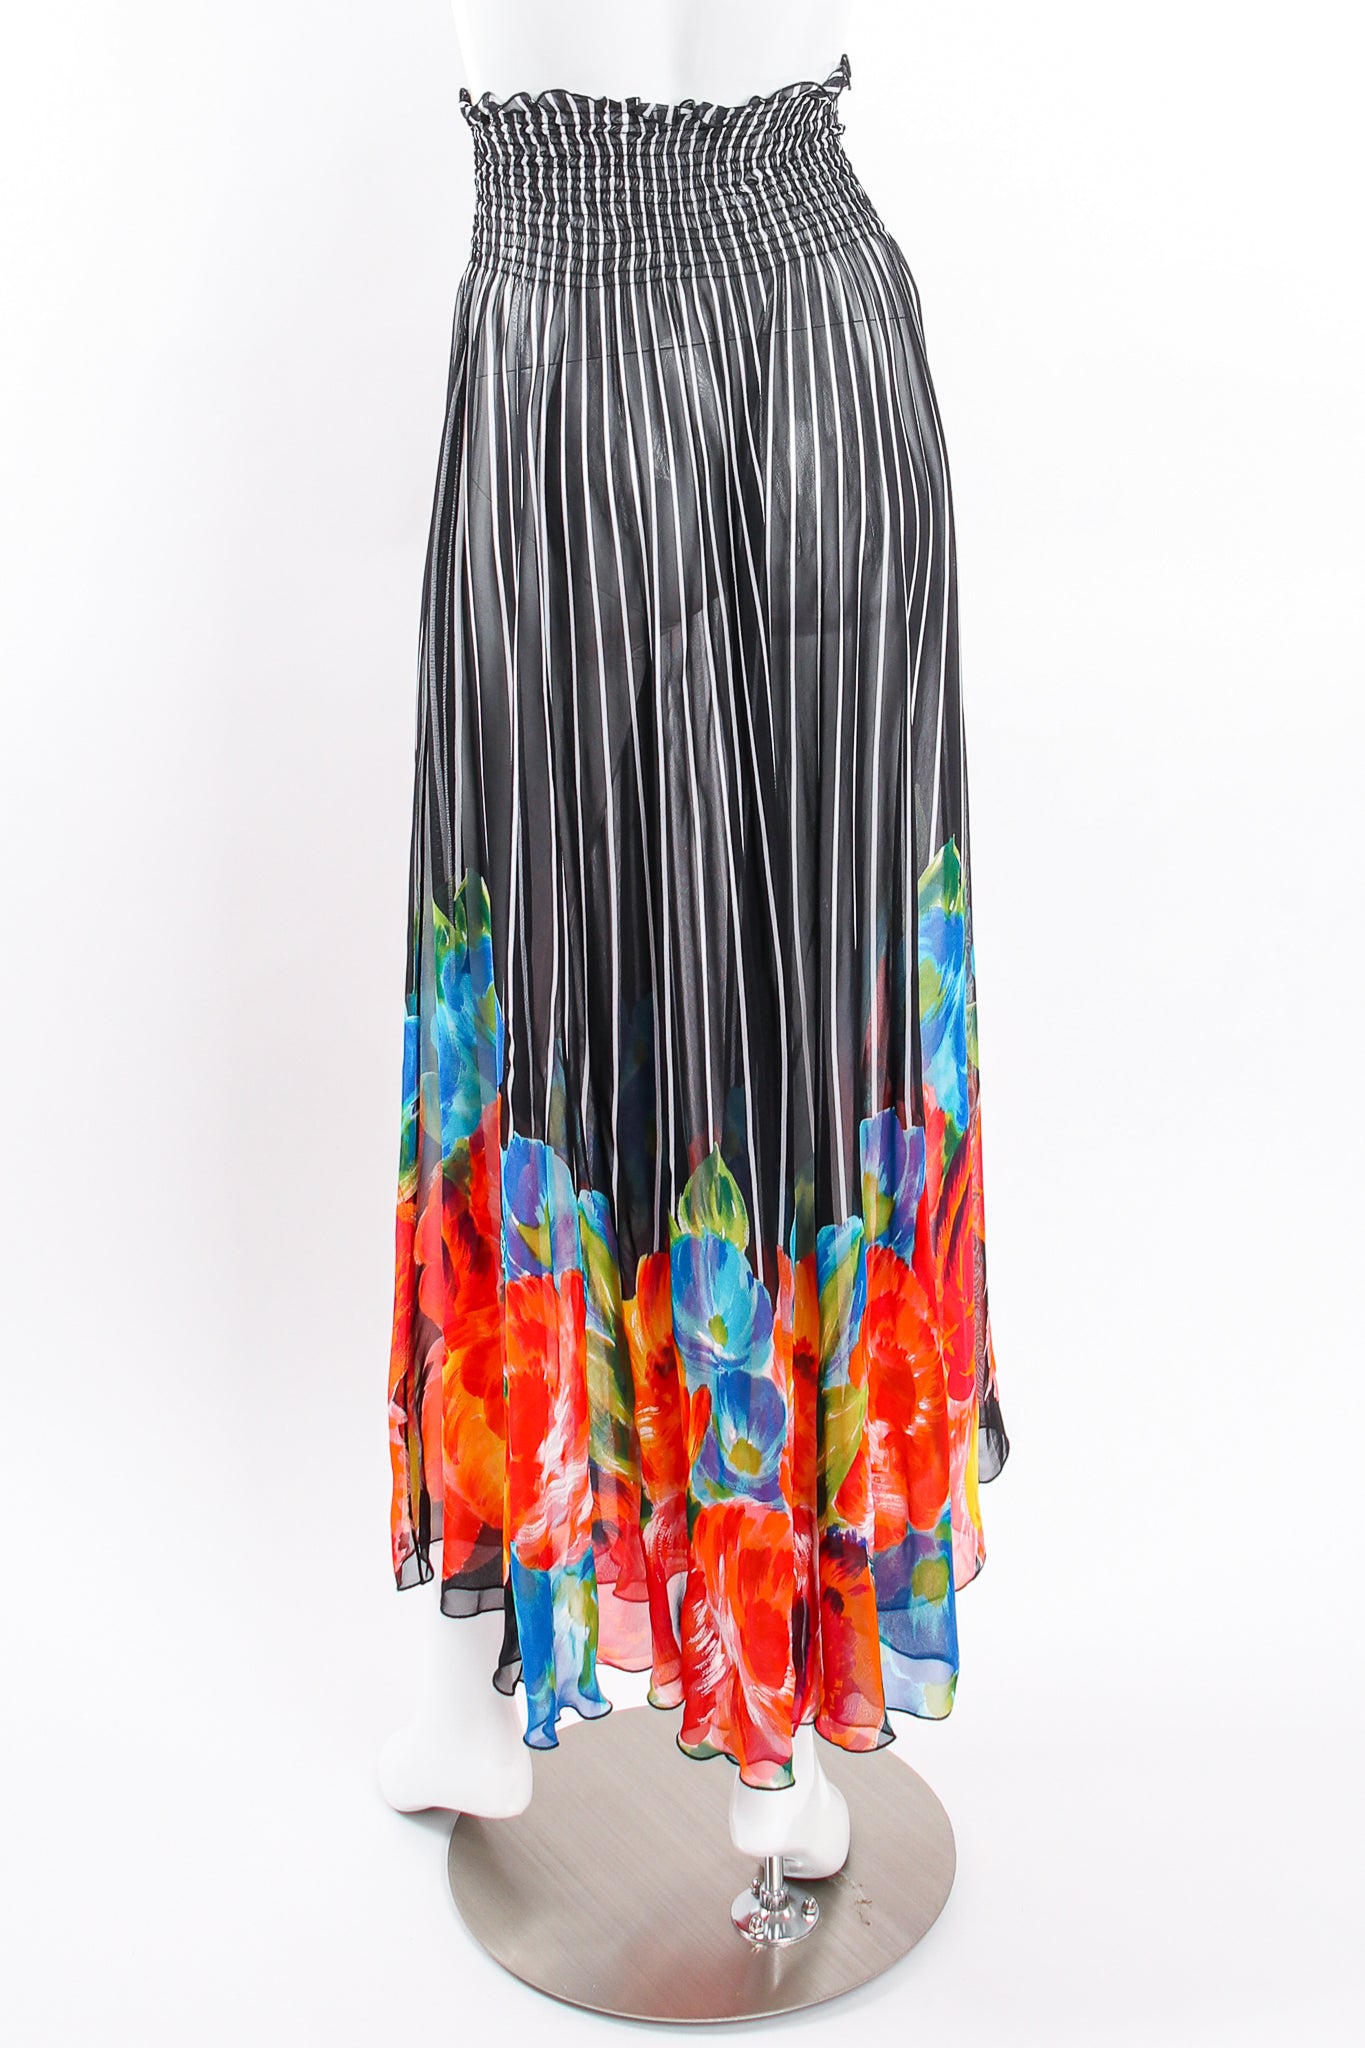 Vintage Gottex Chiffon Sheer Striped Floral Coverup Skirt on Mannequin back at Recess LA